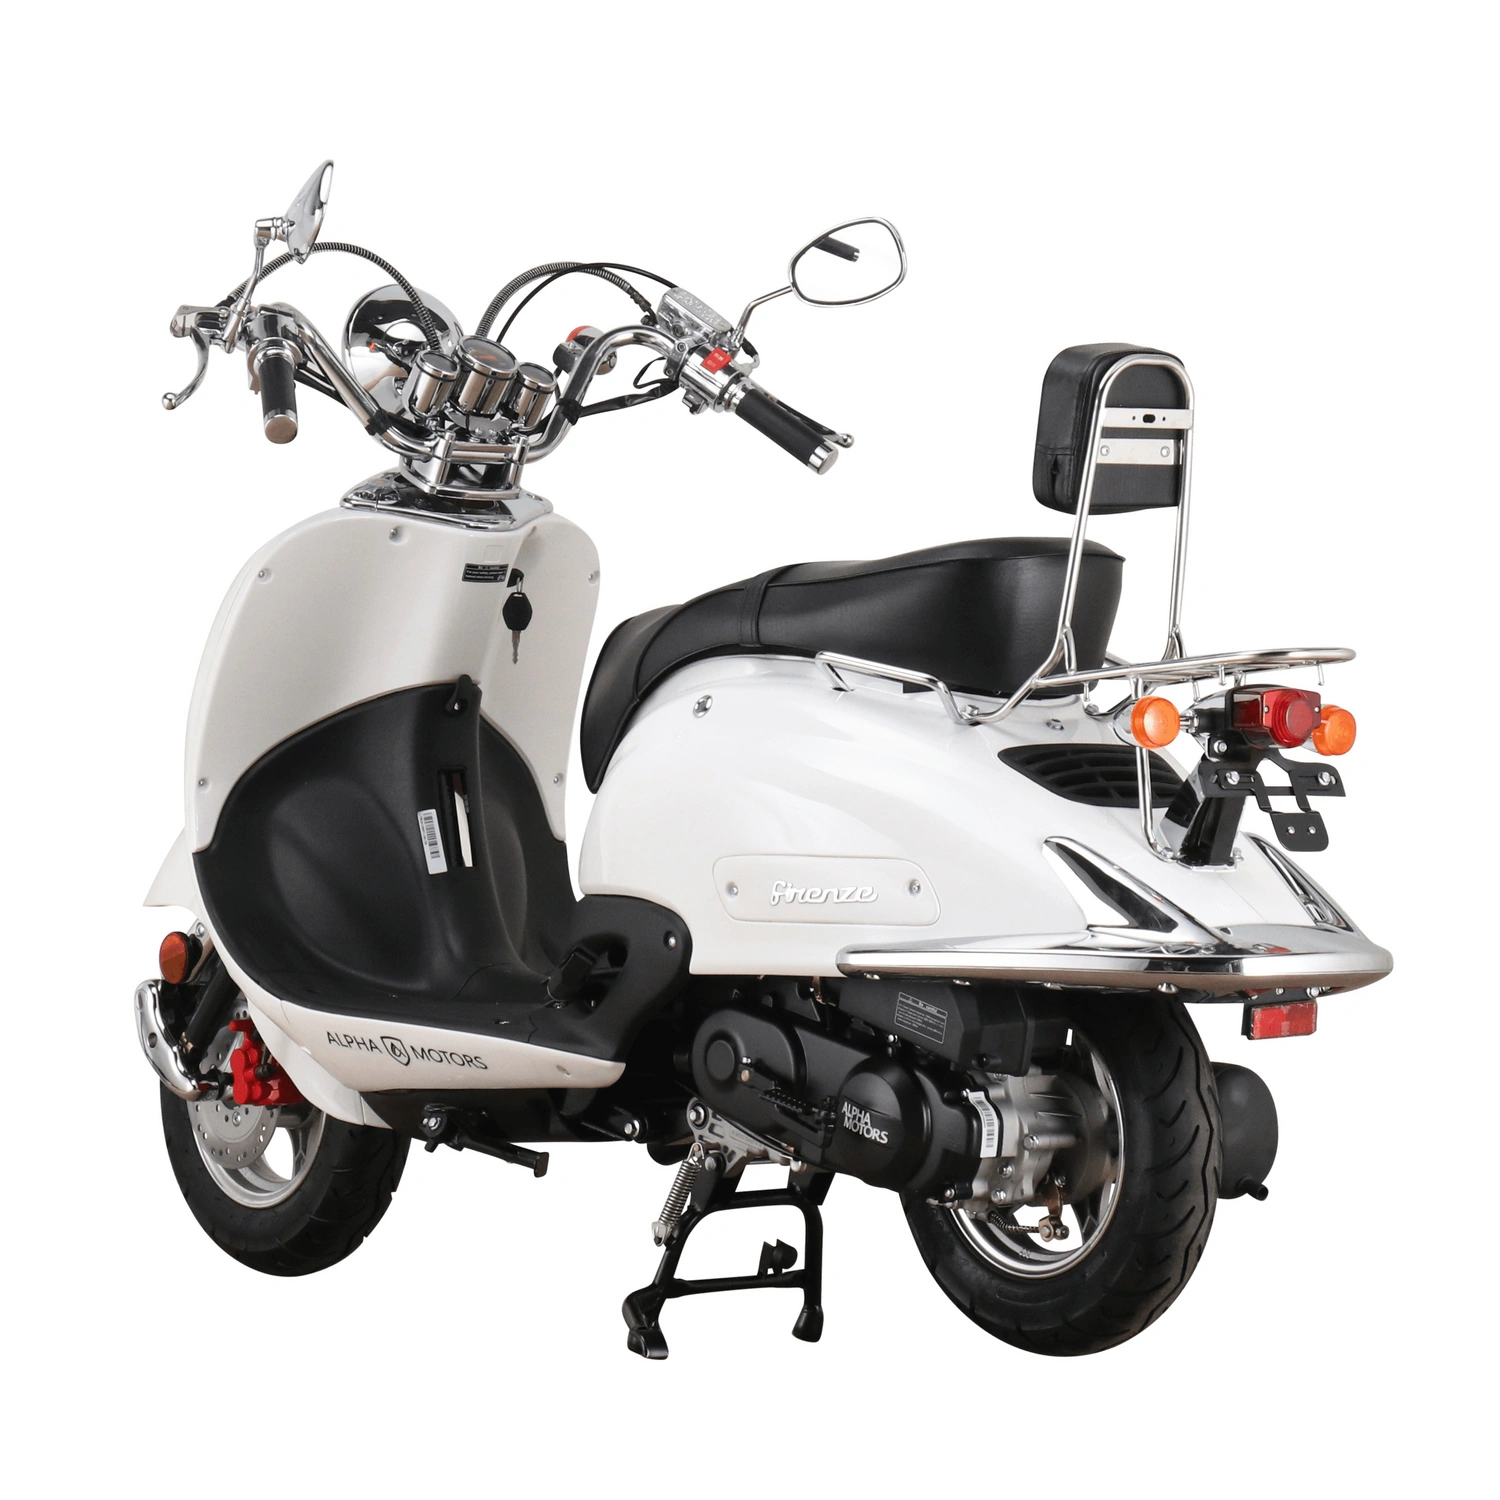 ALPHA MOTORS Motorroller »Firenze«, 50 cm³, 45km/h, Euro 5